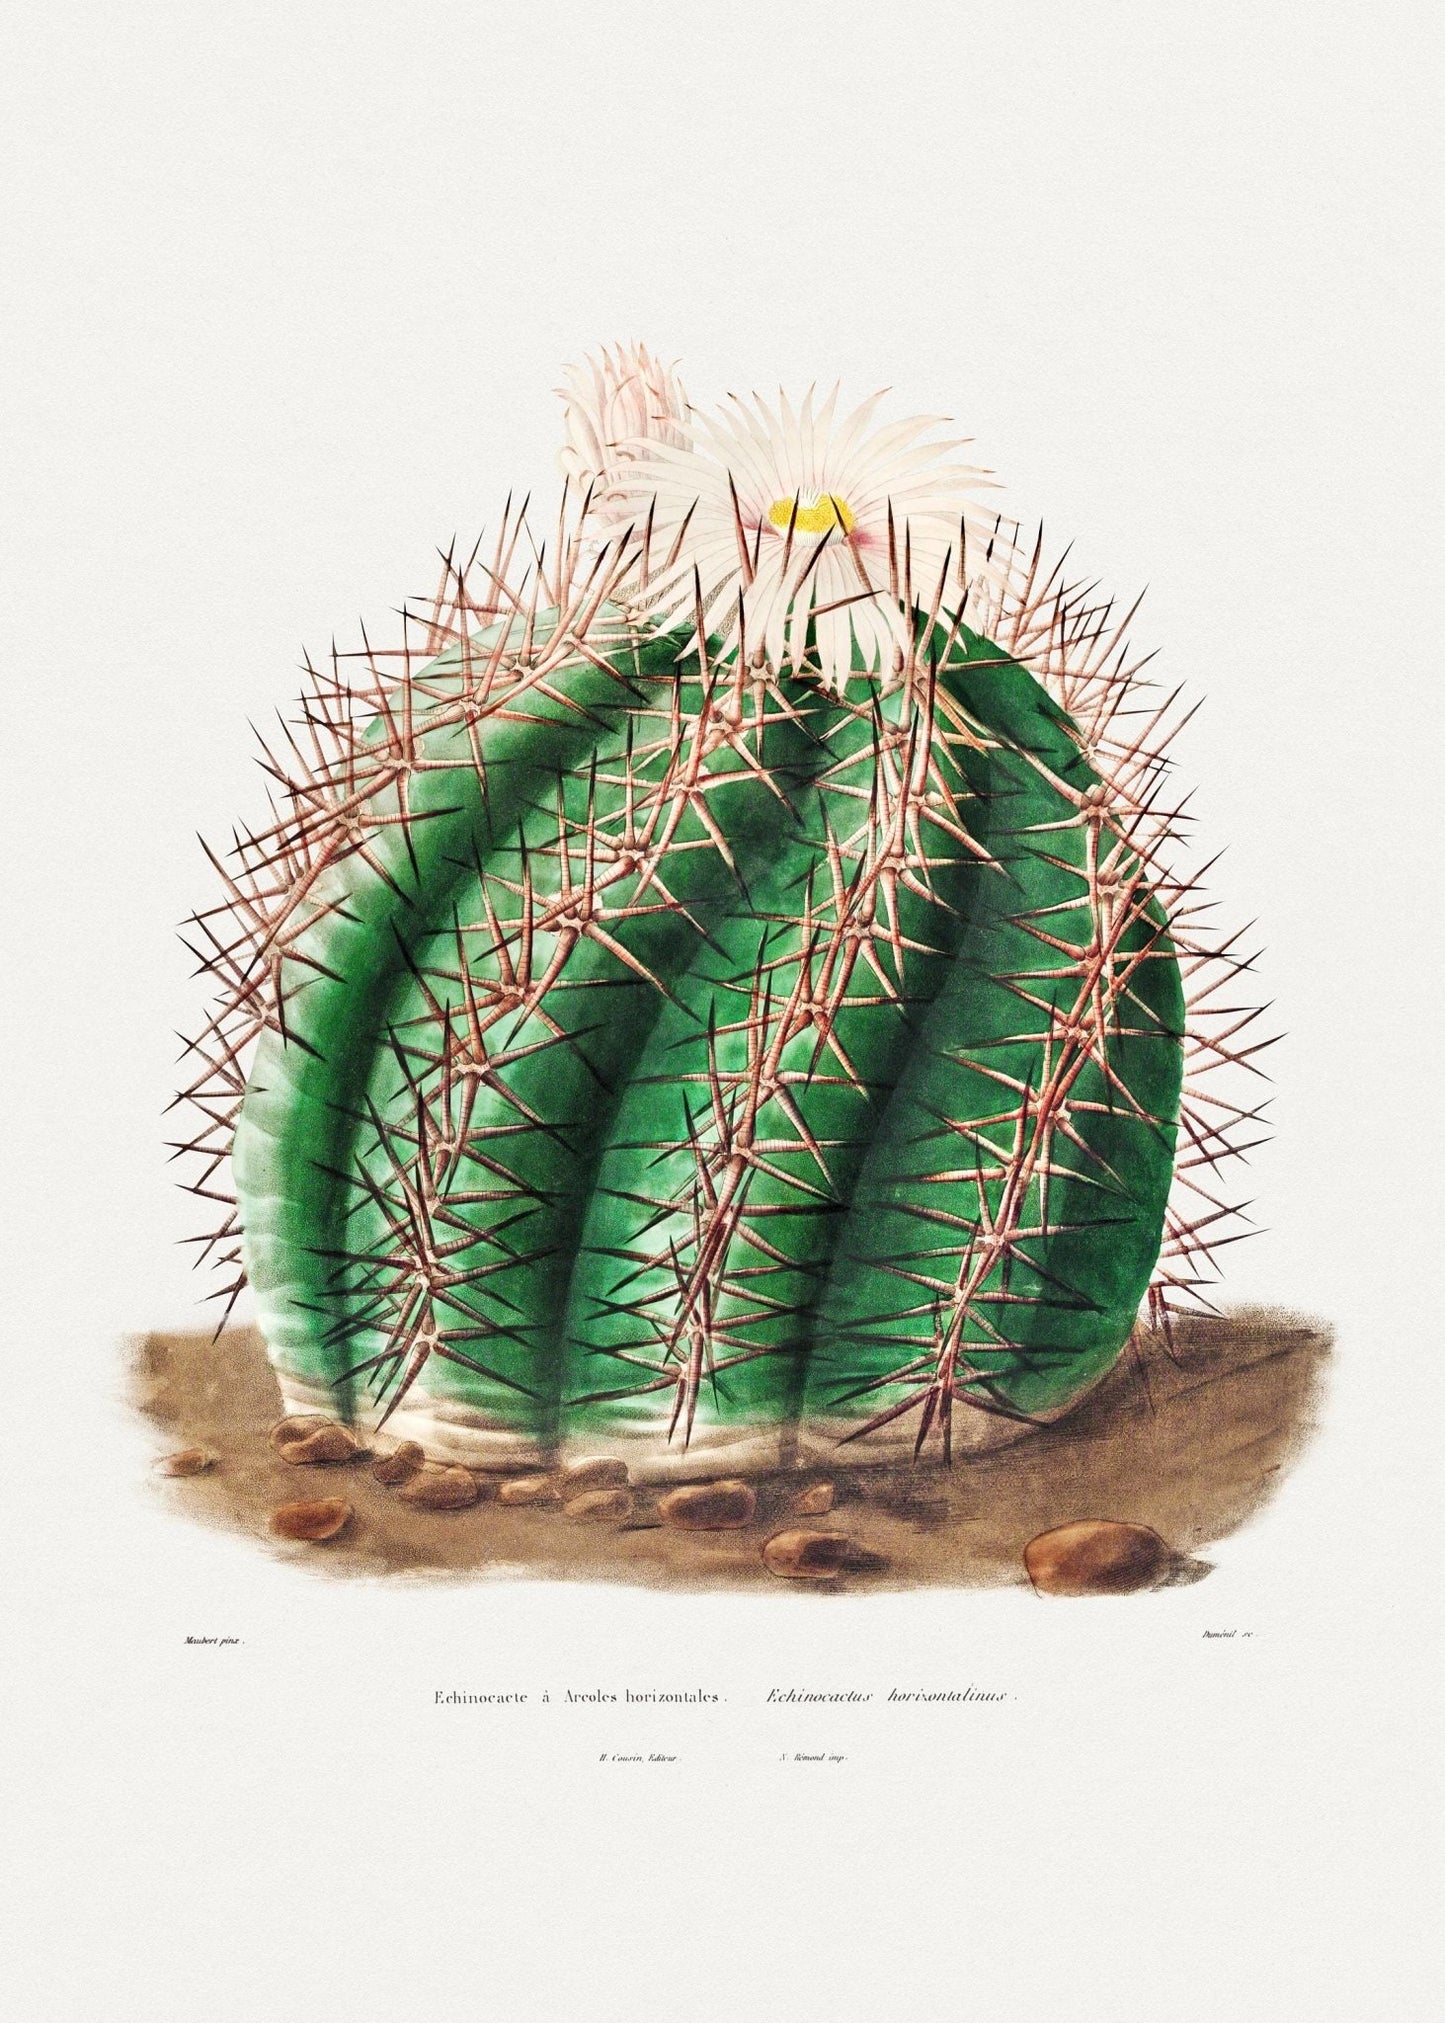 Turk's Head Cactus (Botanical Lithograph)